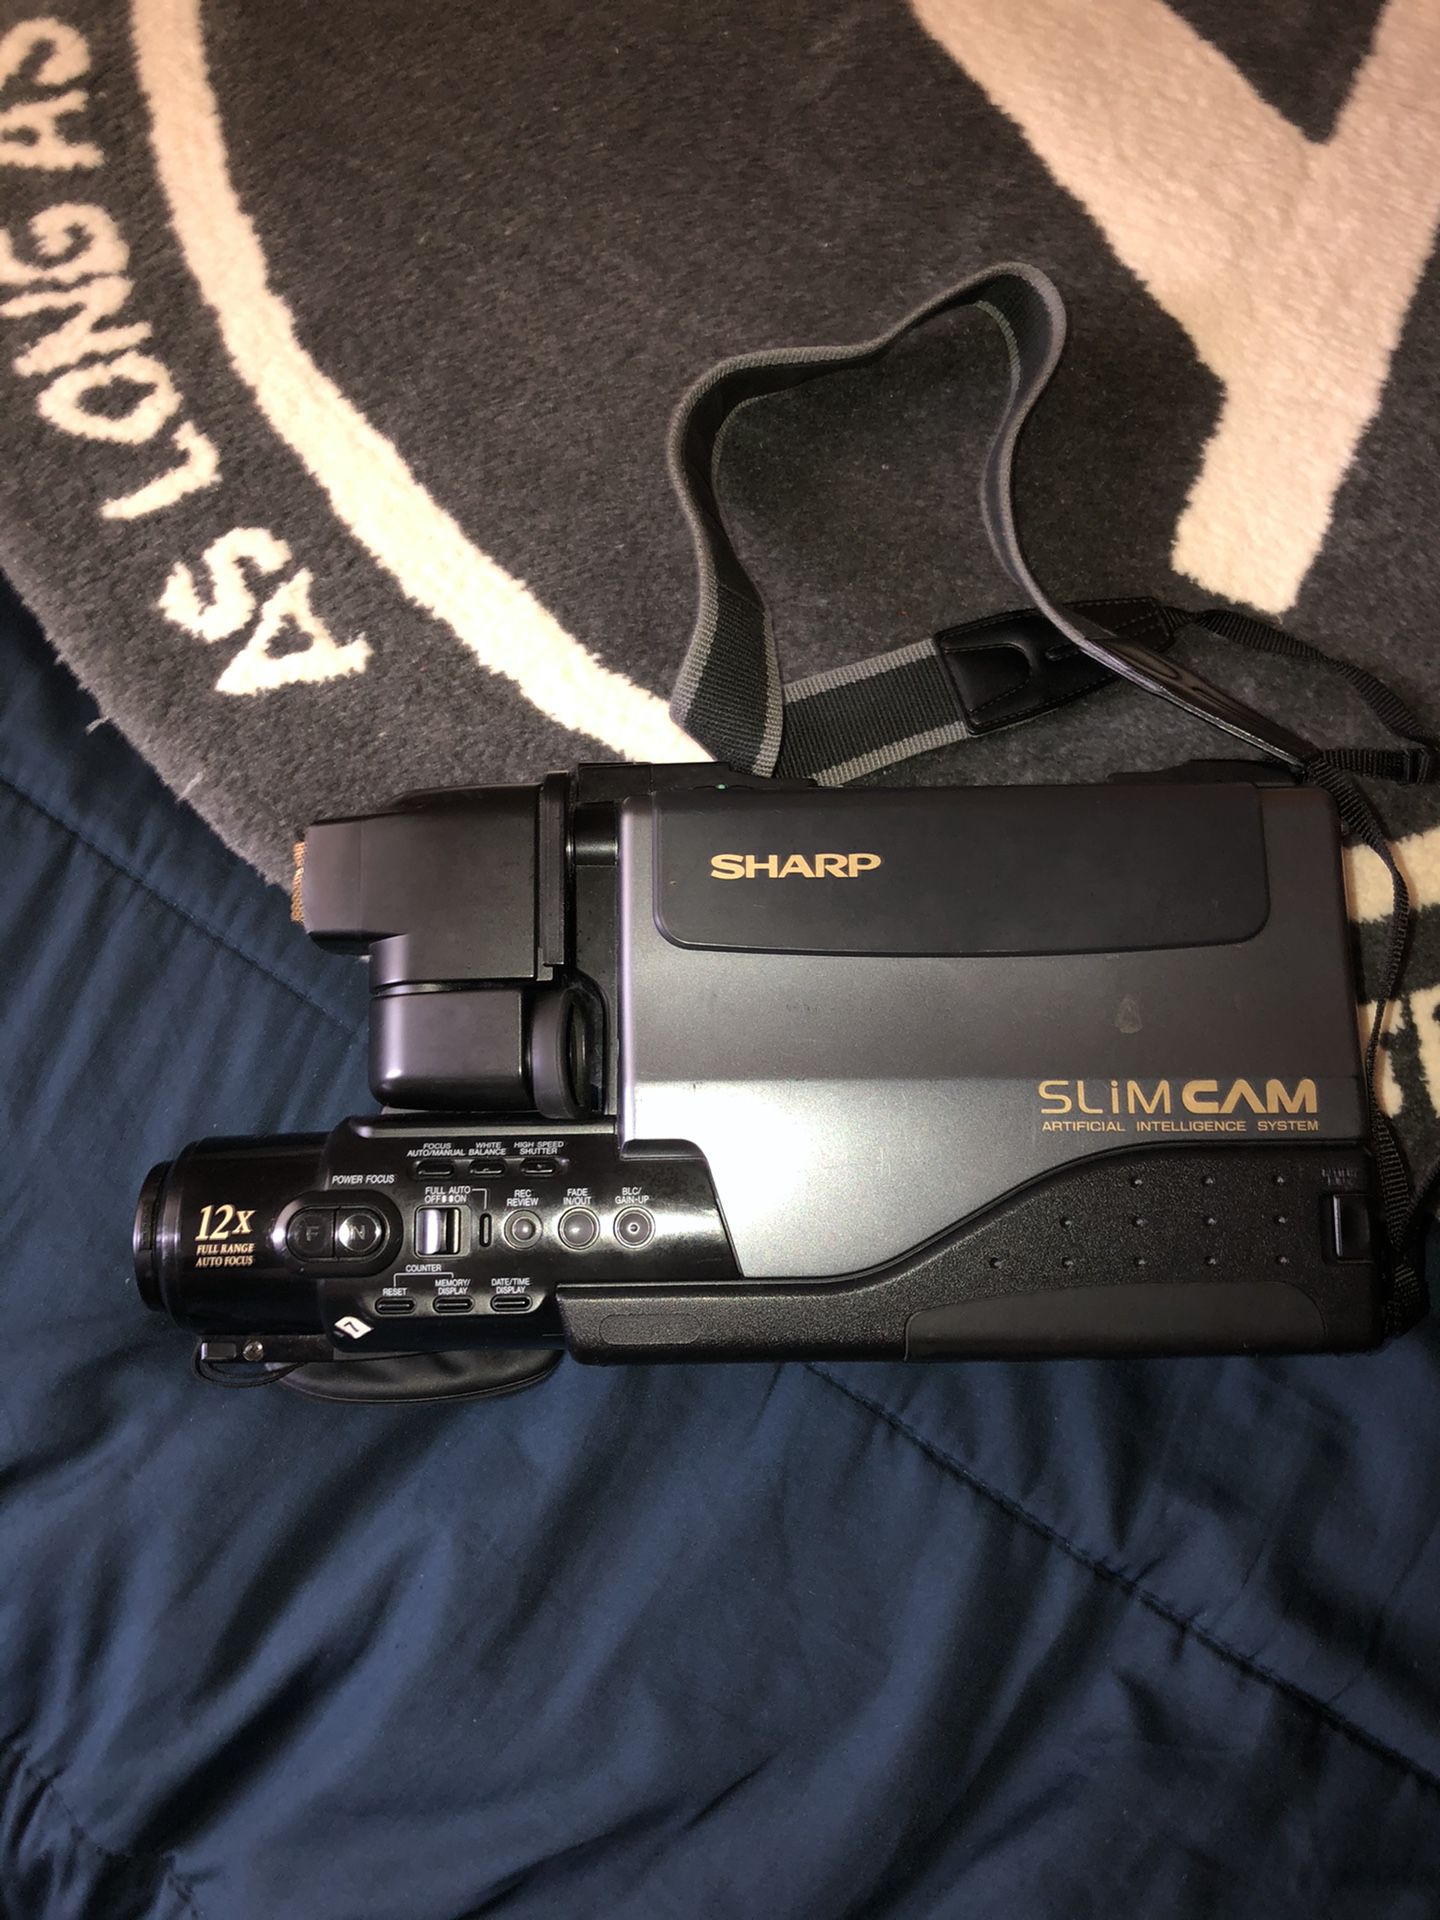 Sharp VHS camera